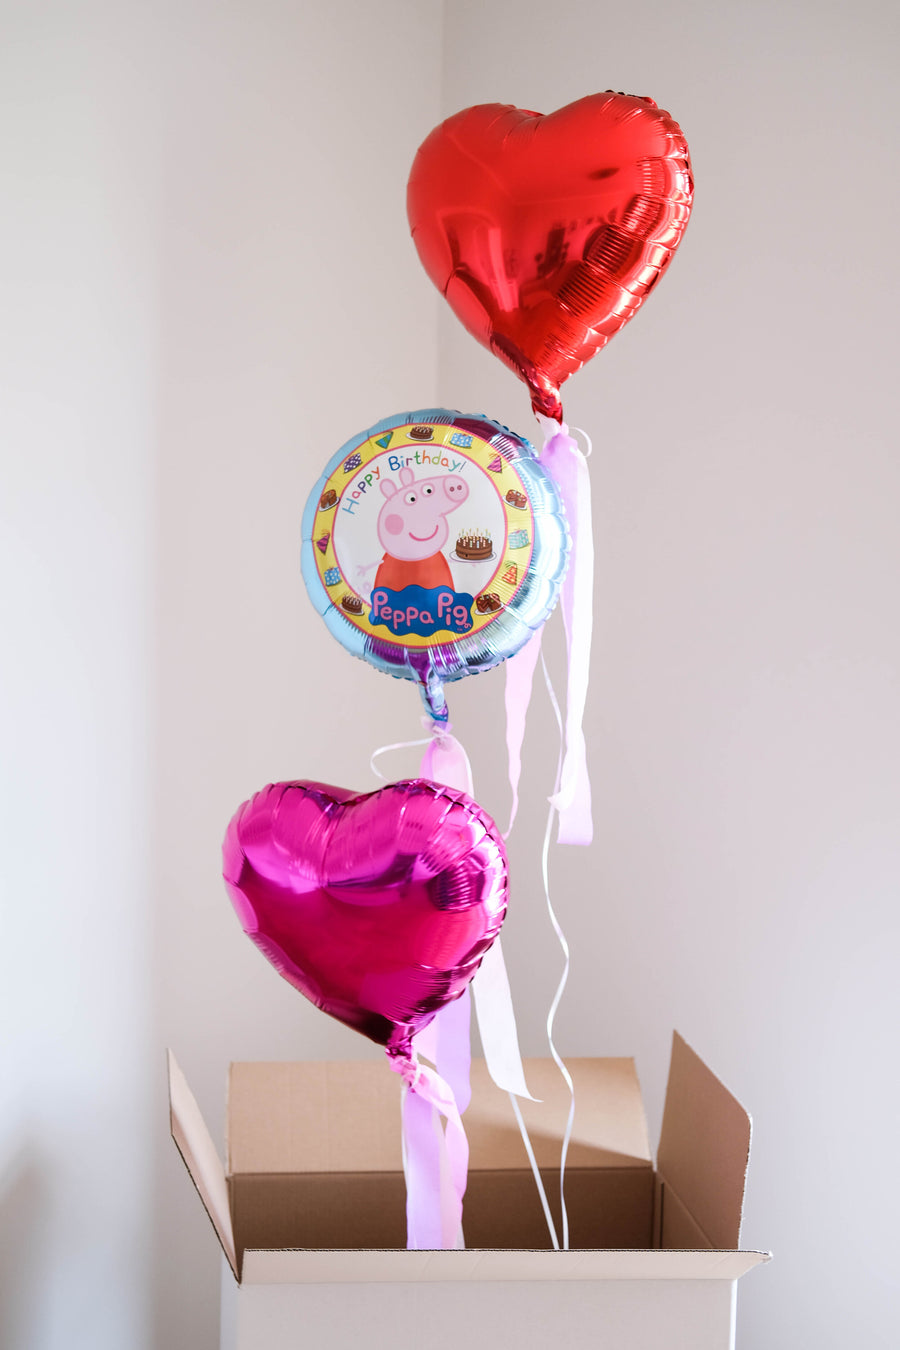 Happy Birthday Peppa Wutz 3-er Ballonset